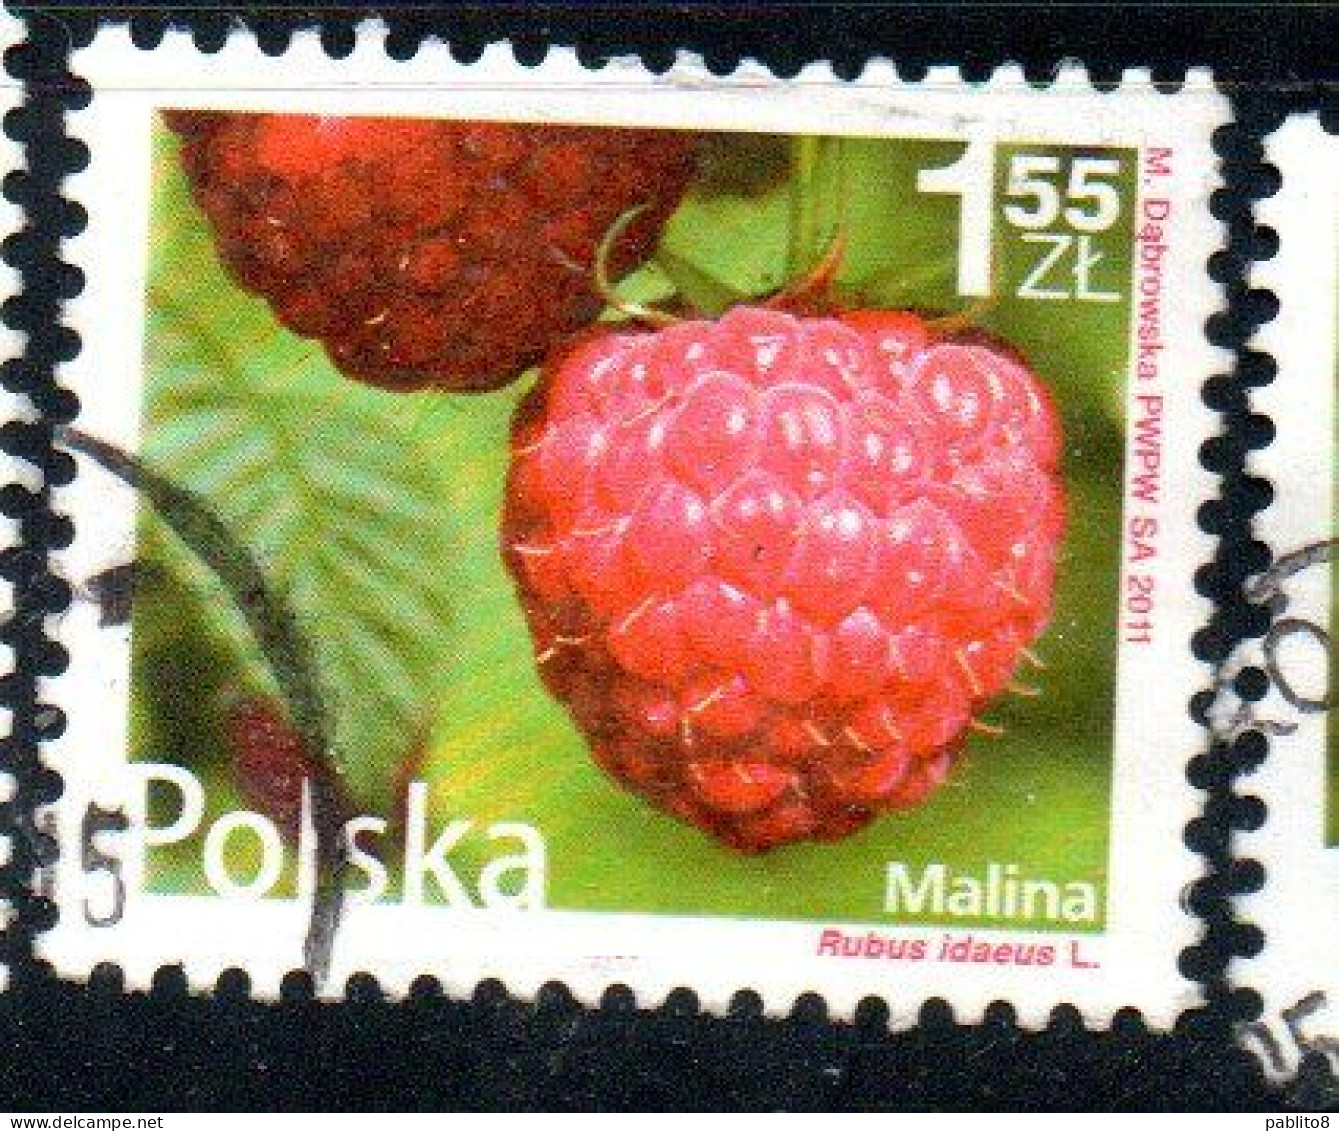 POLONIA POLAND POLSKA 2011 FRUIT AND FLOWERS RUBUS IDAEUS 1.55z USED USATO OBLITERE' - Usati